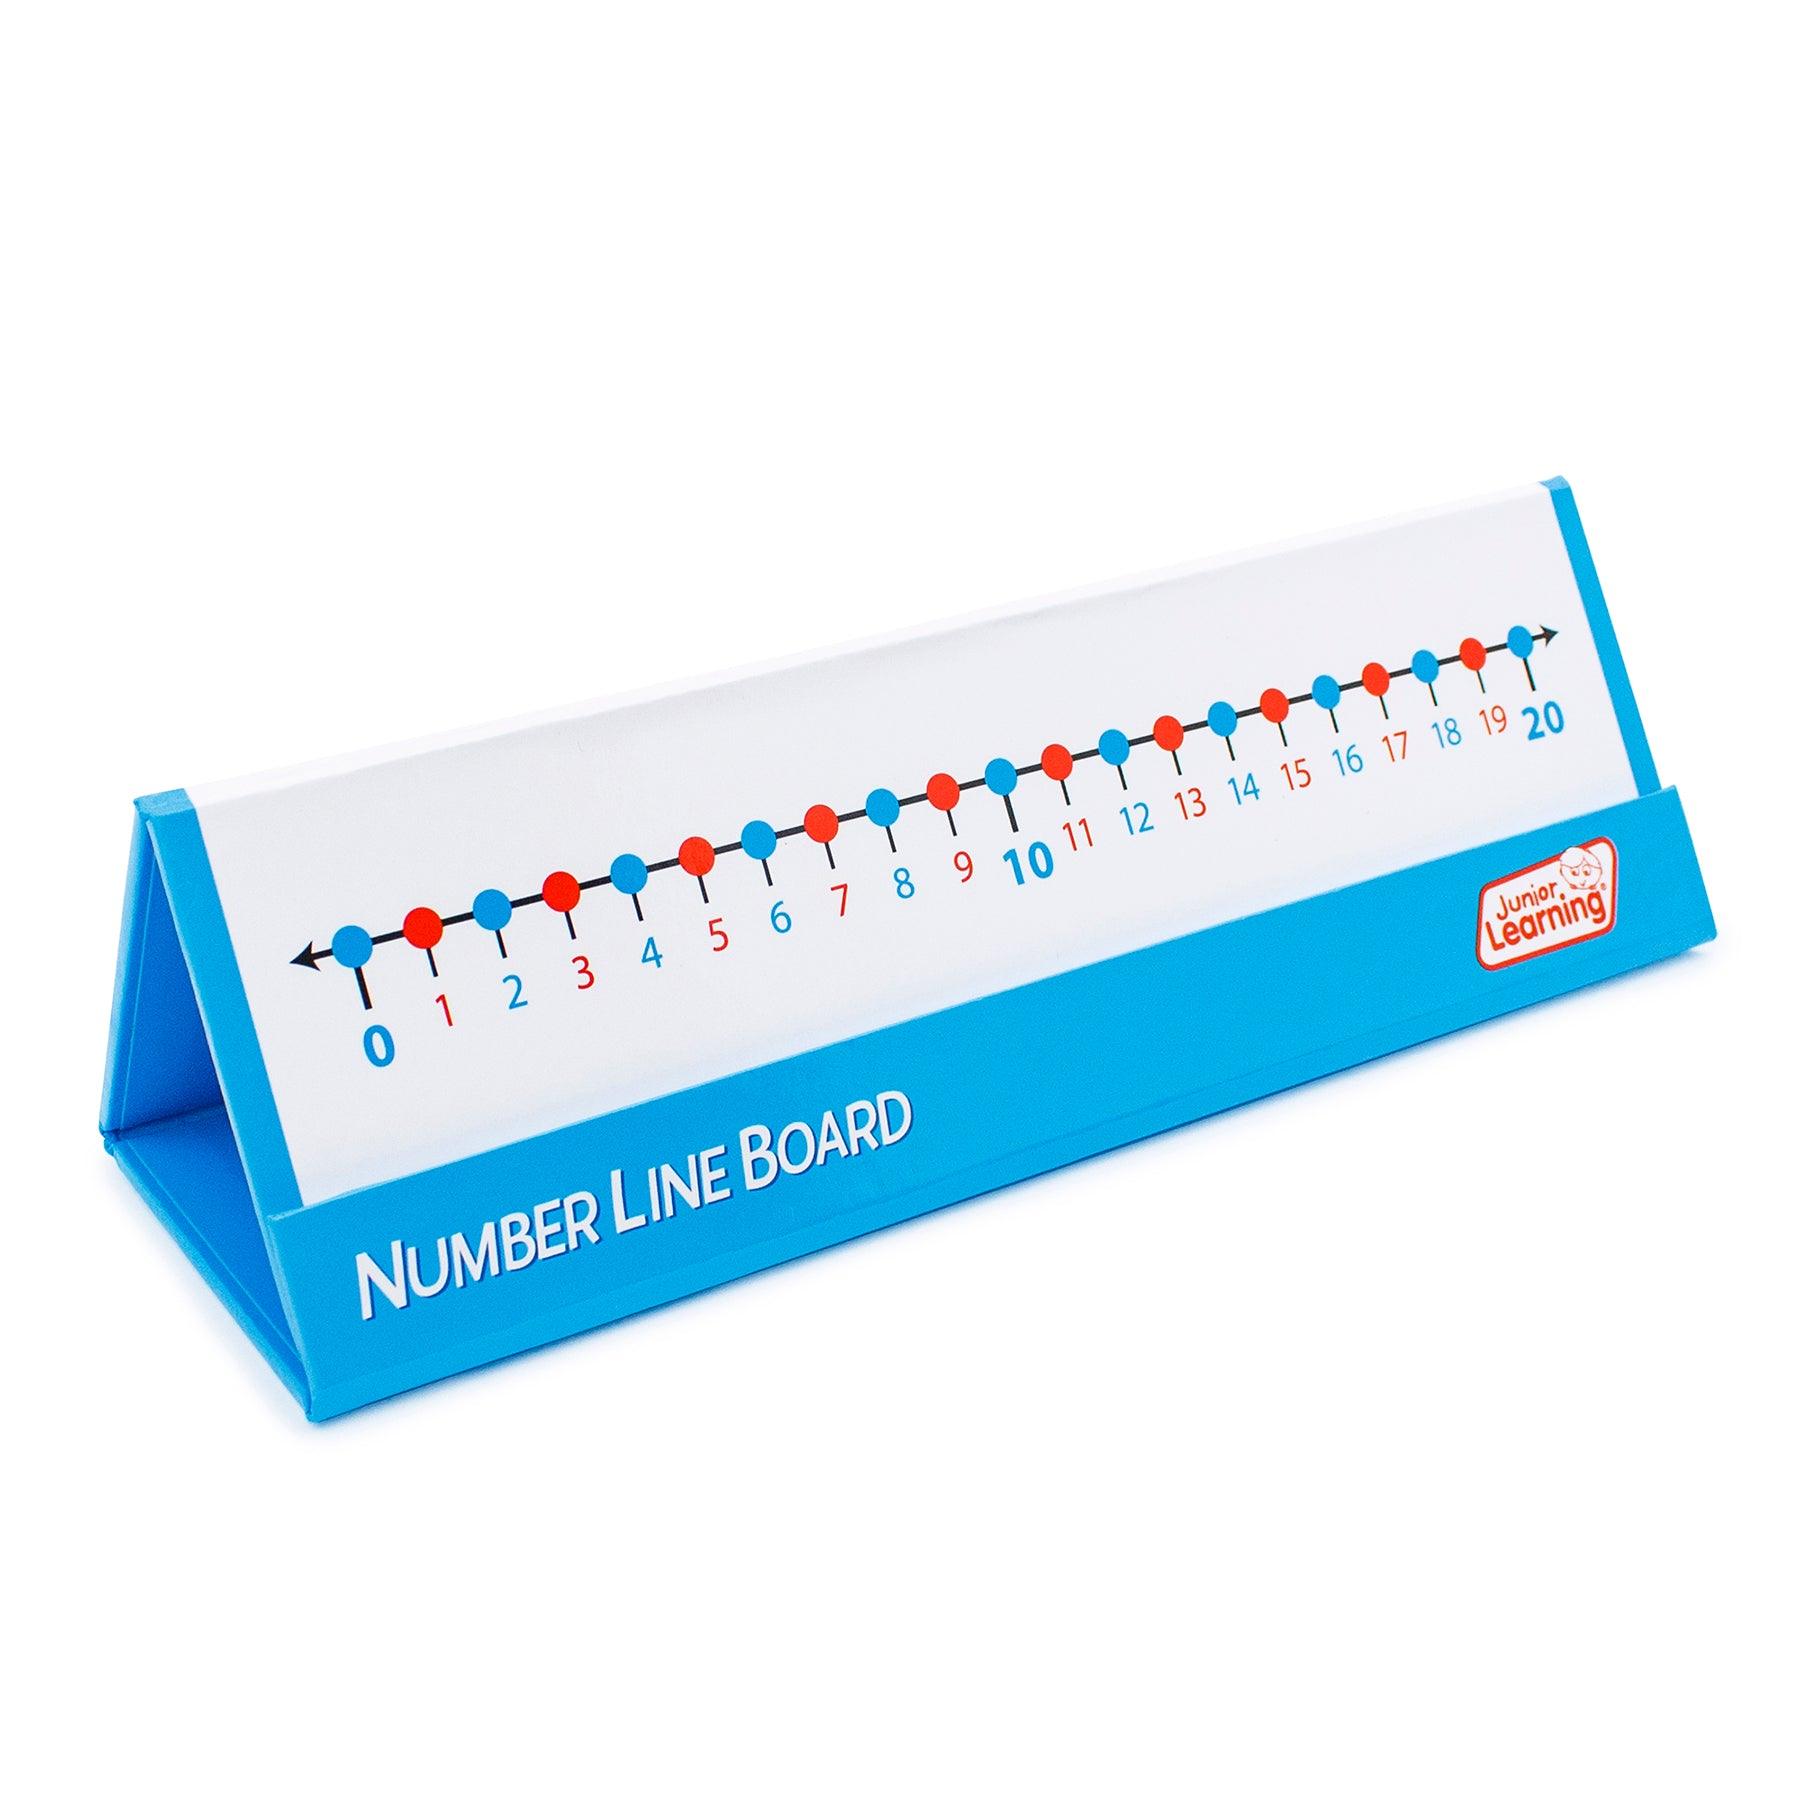 Number Line Board - Loomini